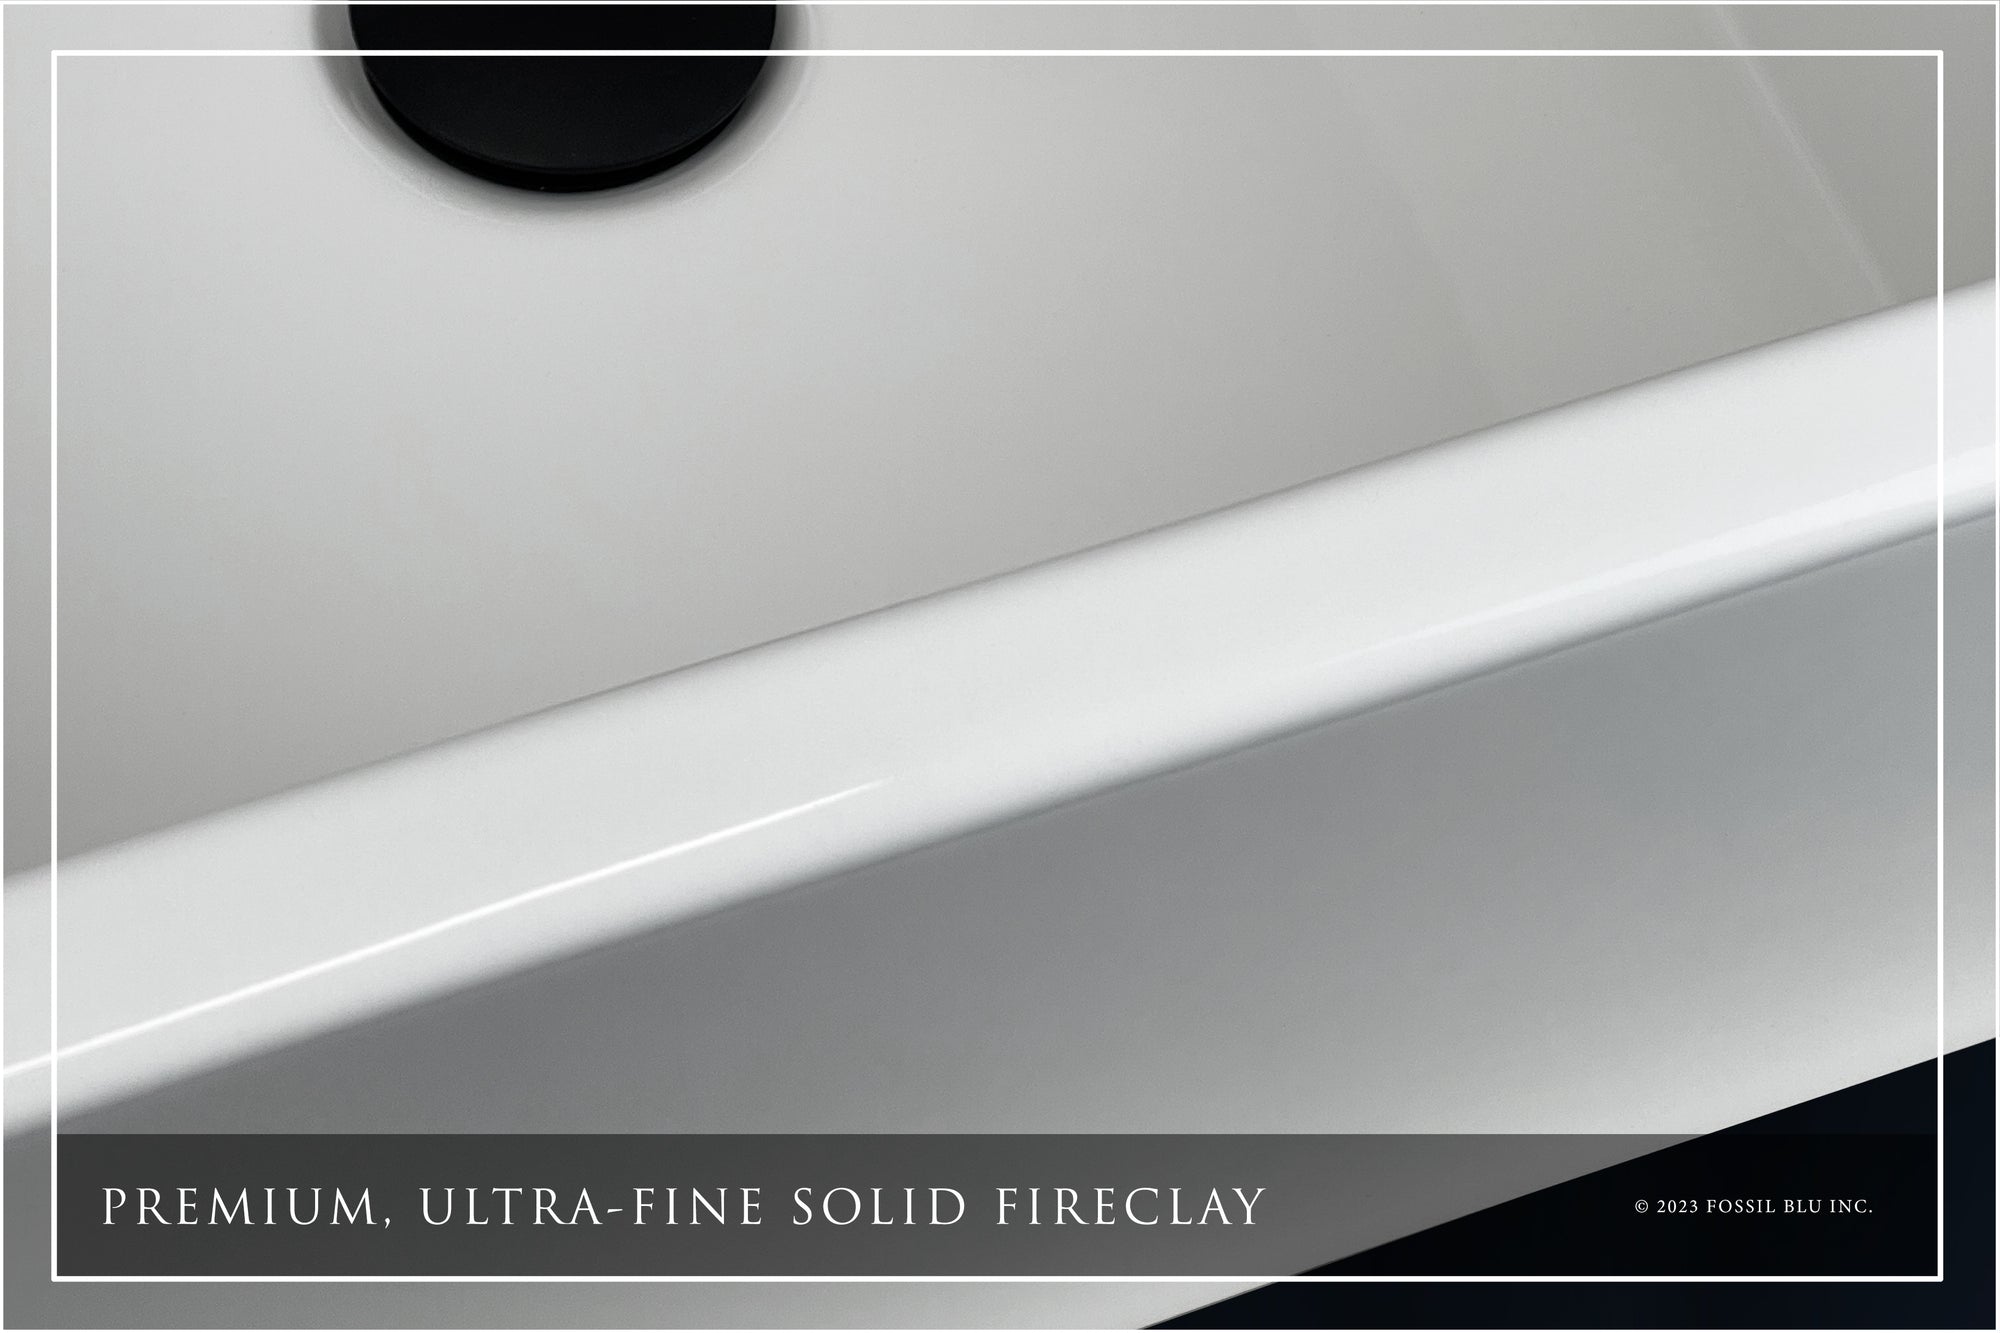 FSW8000 LUXURY 18 x 16 INCH REVERSIBLE SOLID FIRECLAY BATHROOM FARMHOUSE SINK IN WHITE, FLAT FRONT